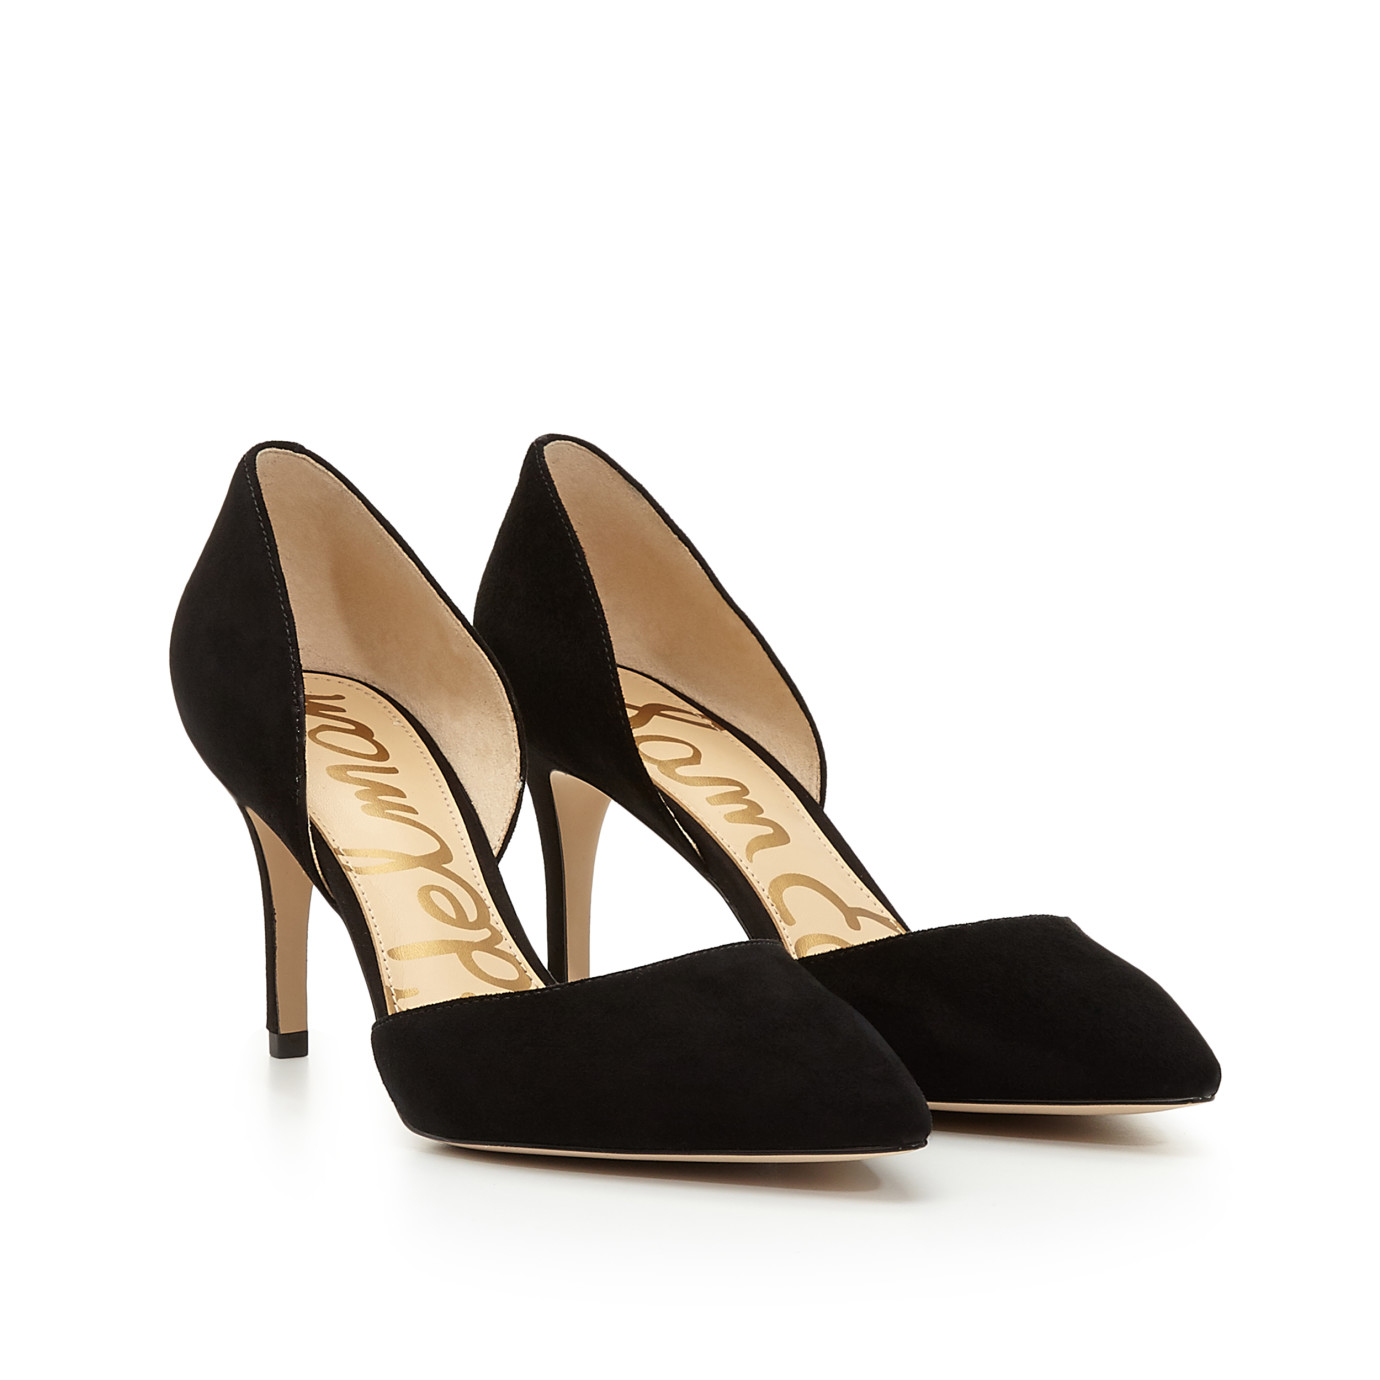 2 inch black heels